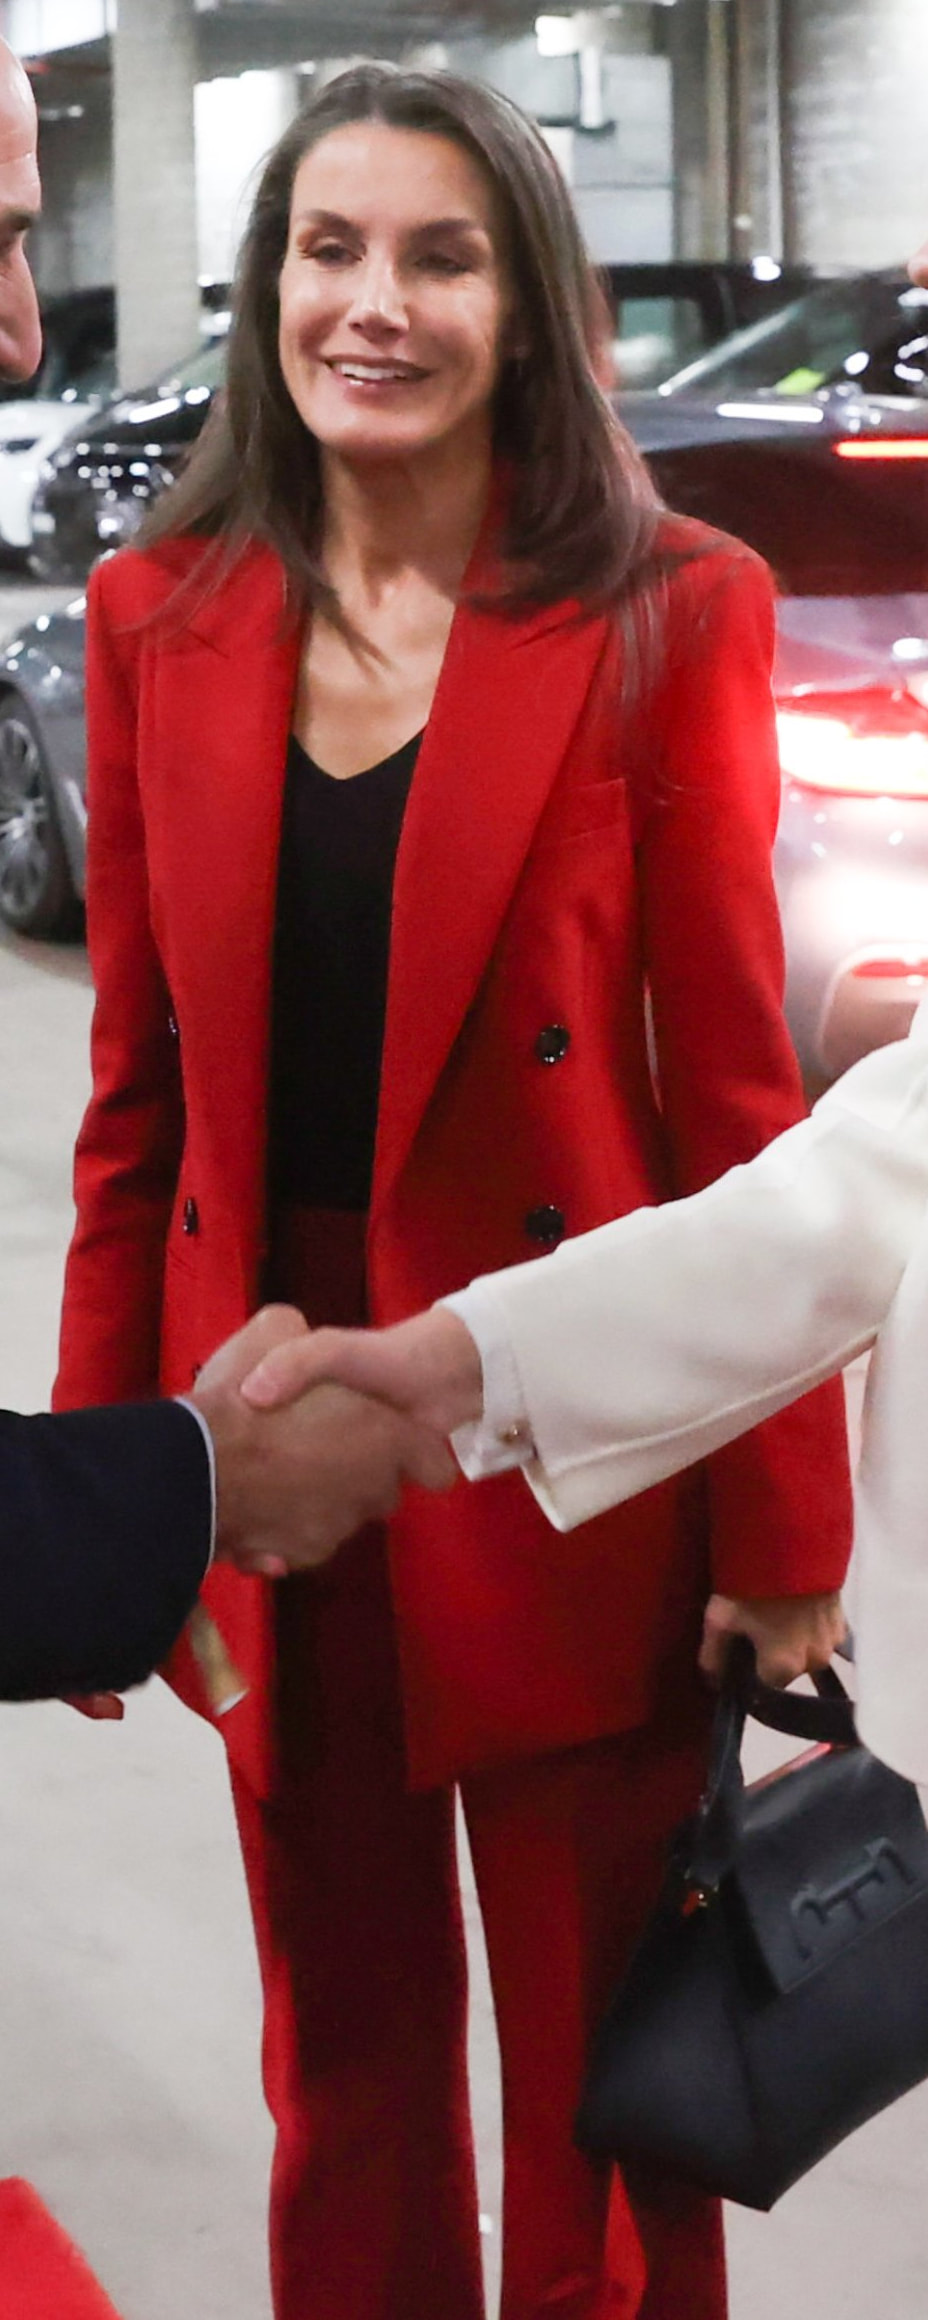 Hugo Boss Jaline Double-Breasted Blazer in Red as seen on Queen Letizia